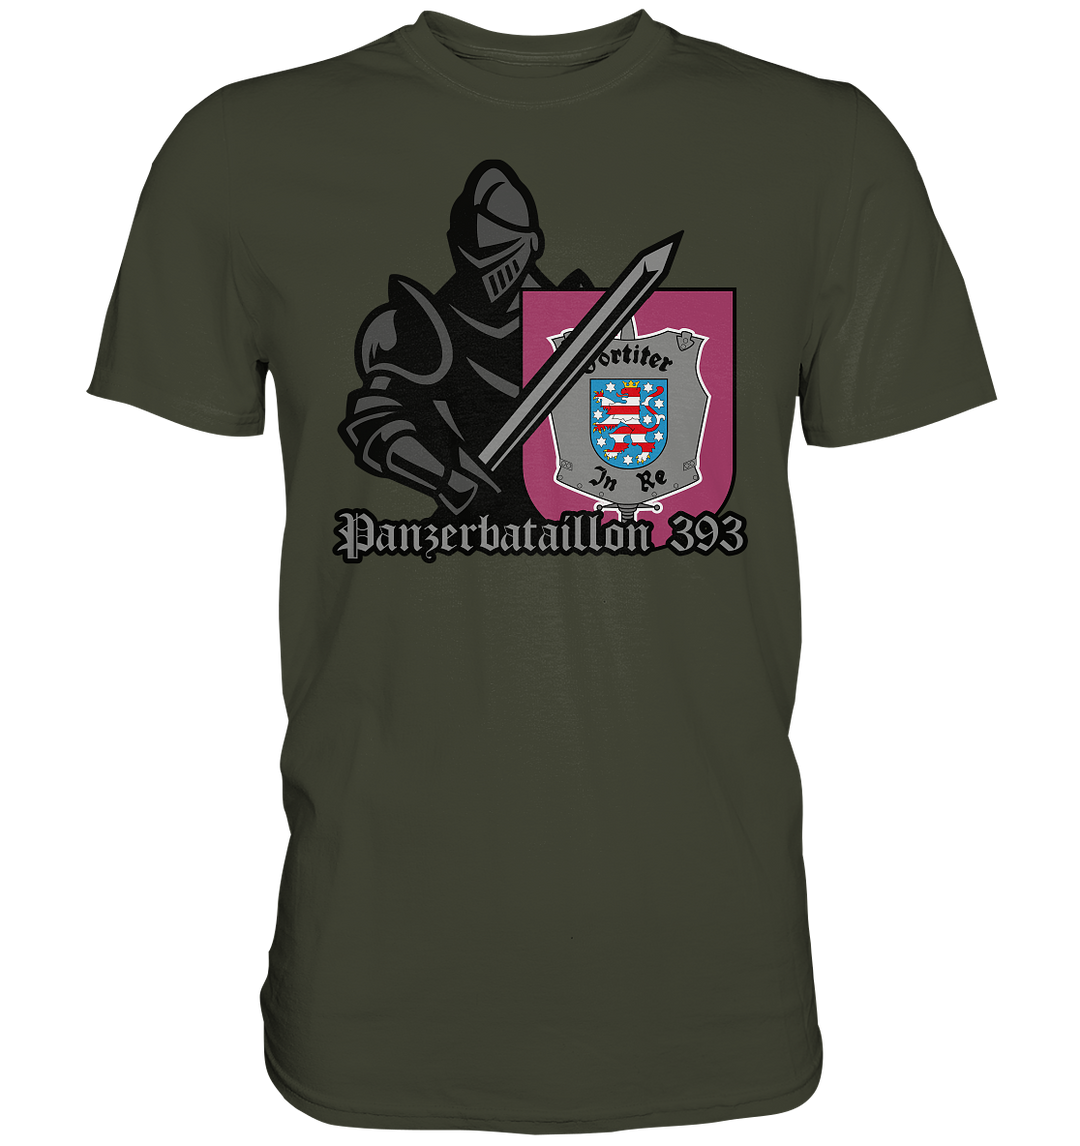 "PzBtl 393 - Ritter" - Premium Shirt